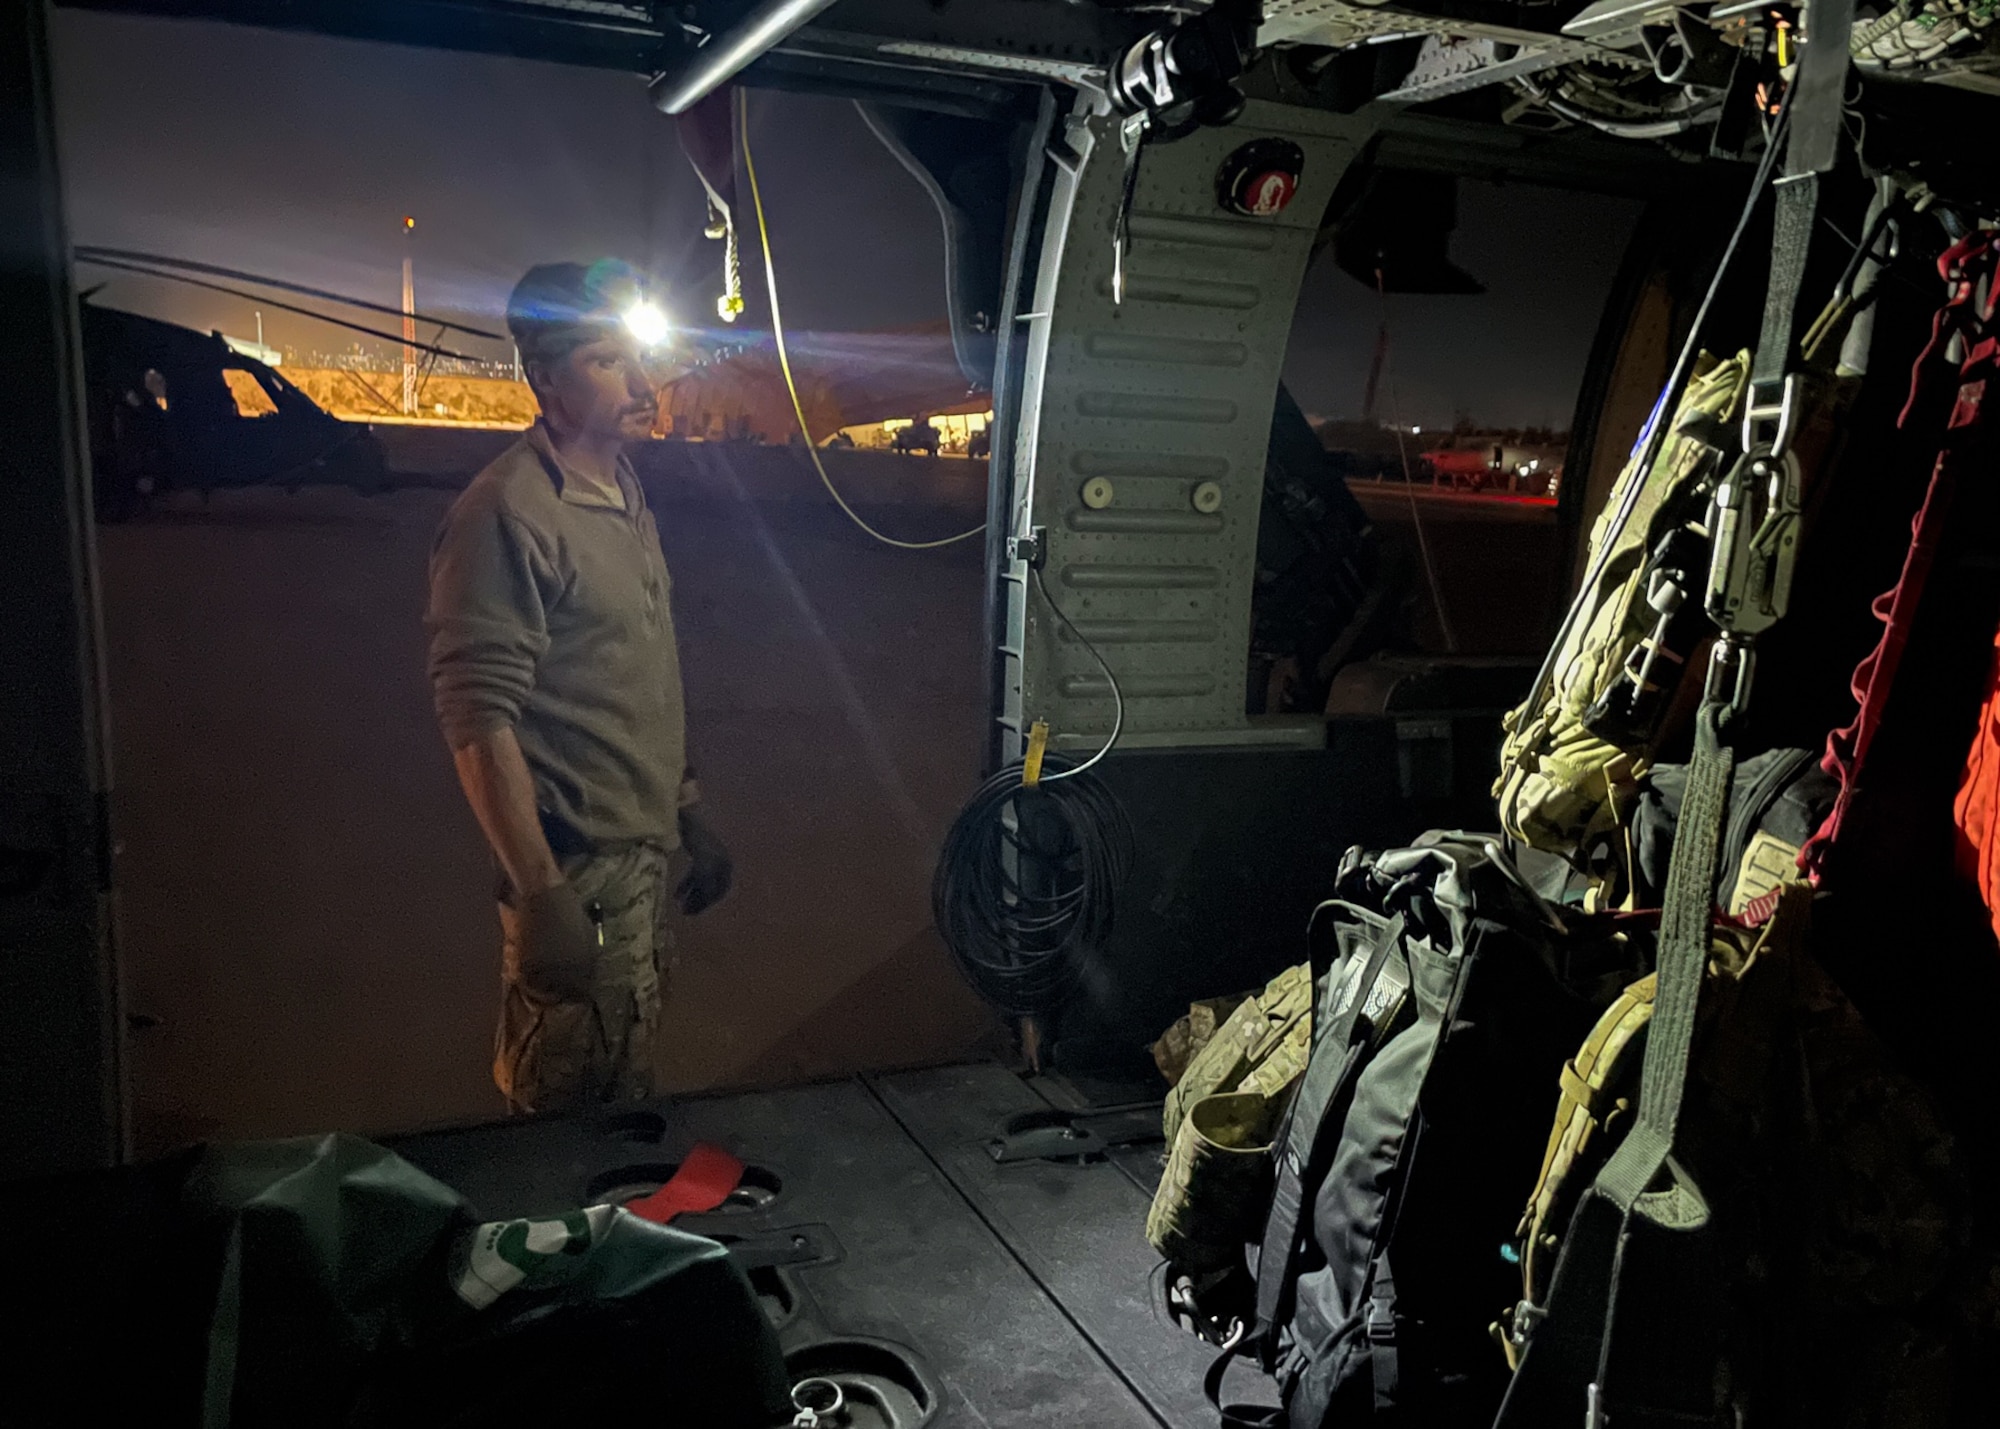 Airman works at night